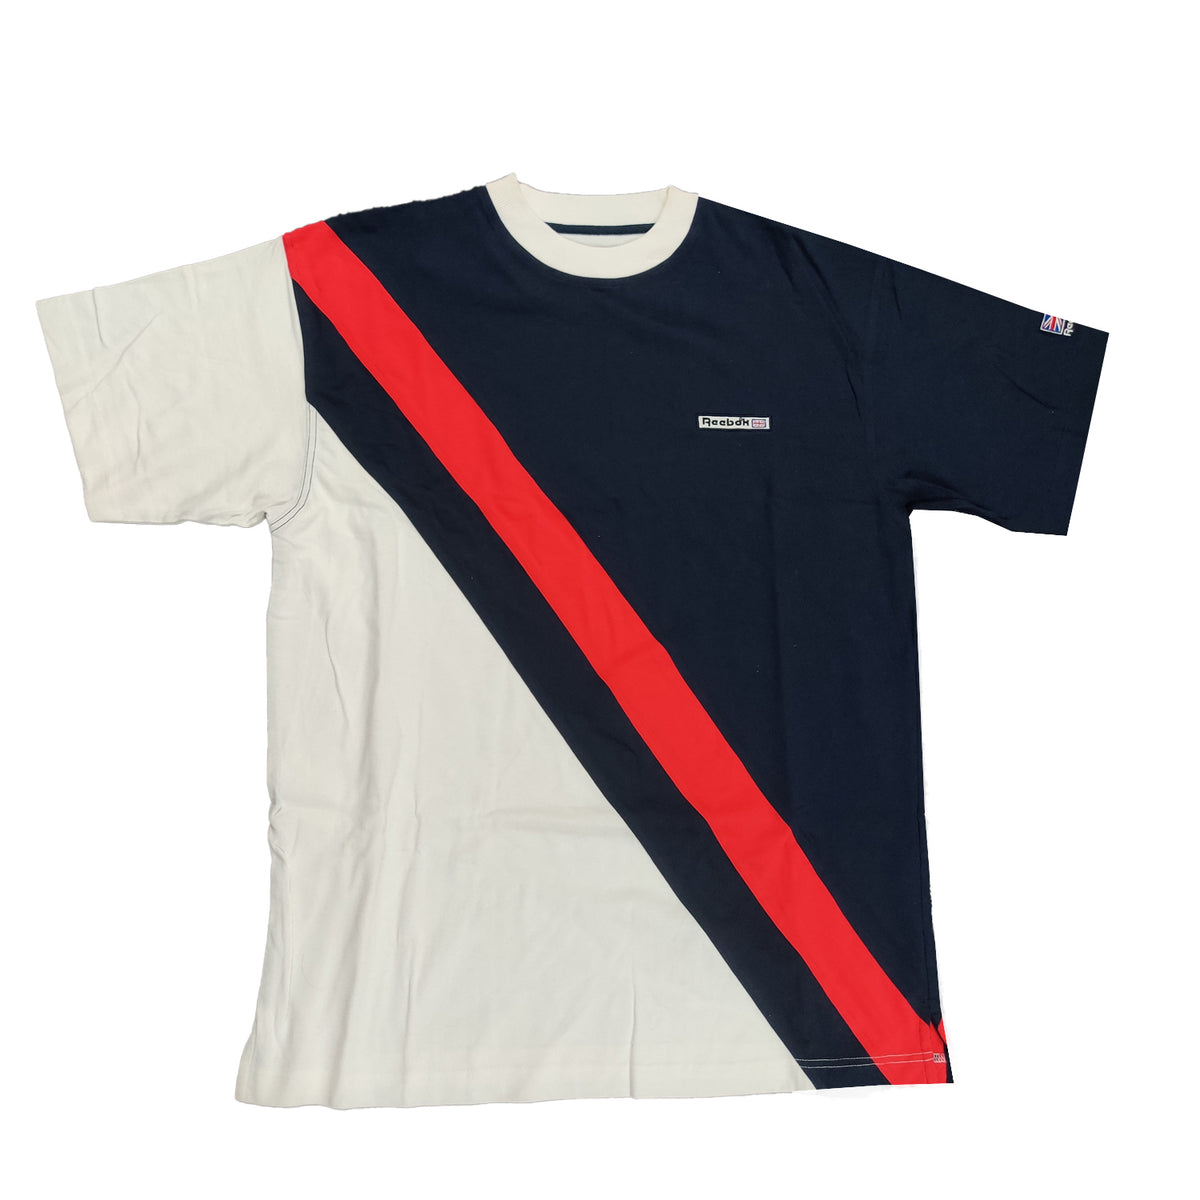 Reebok Mens Clearance Diagonal Stripe T-Shirt - Large